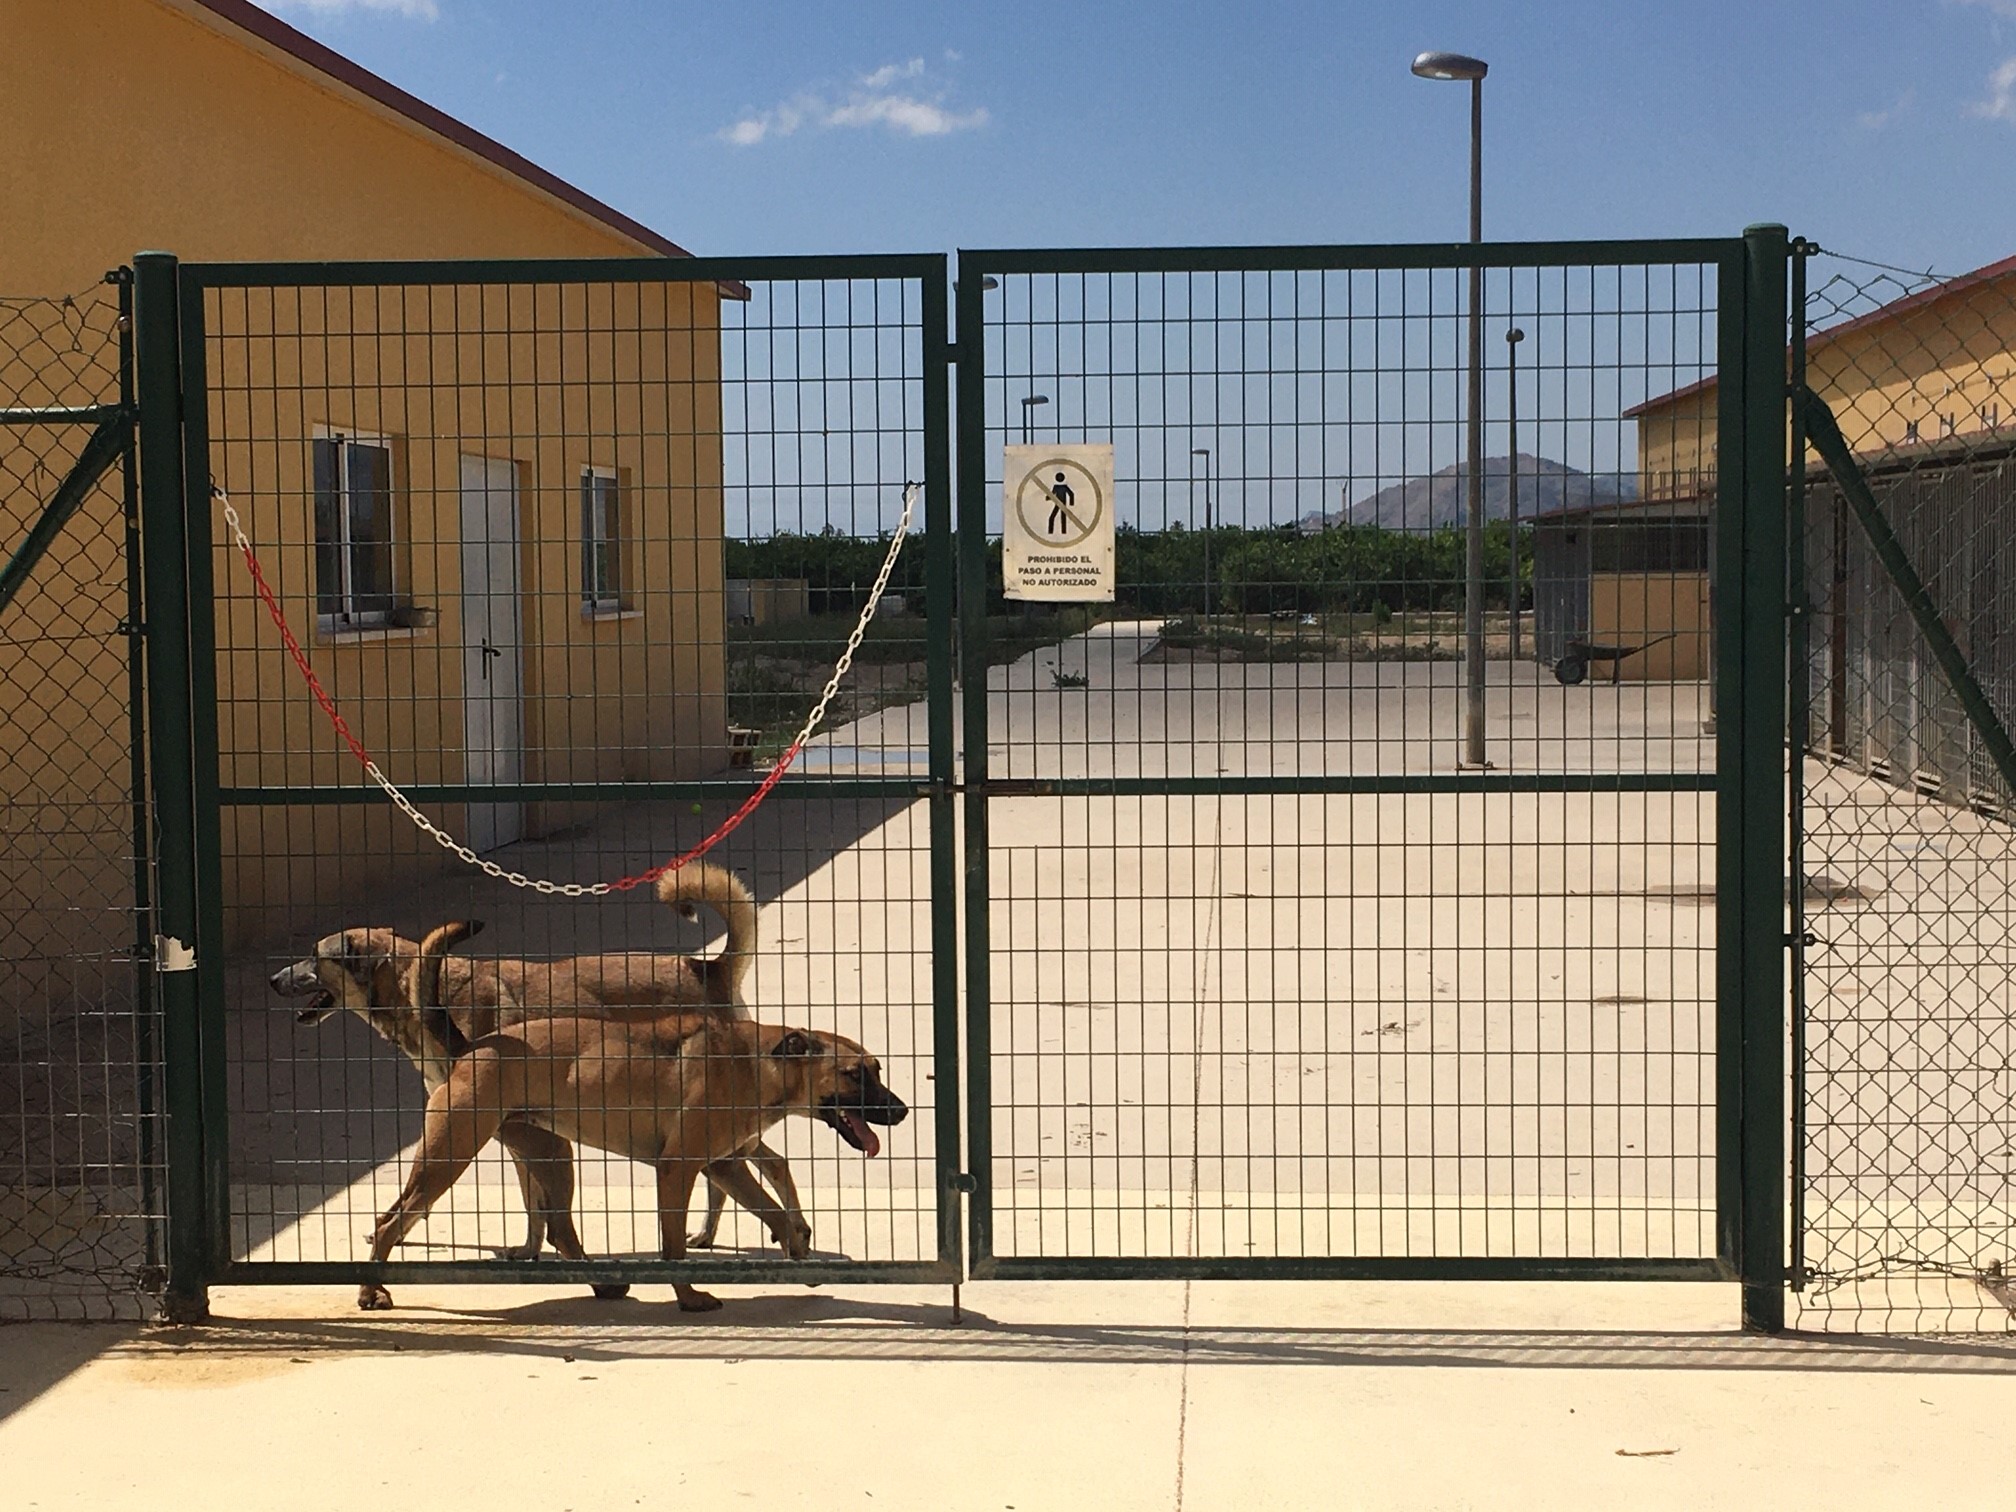 Orihuela contará con un parque canino - agility - Ayuntamiento de Orihuela  : Ayuntamiento de Orihuela